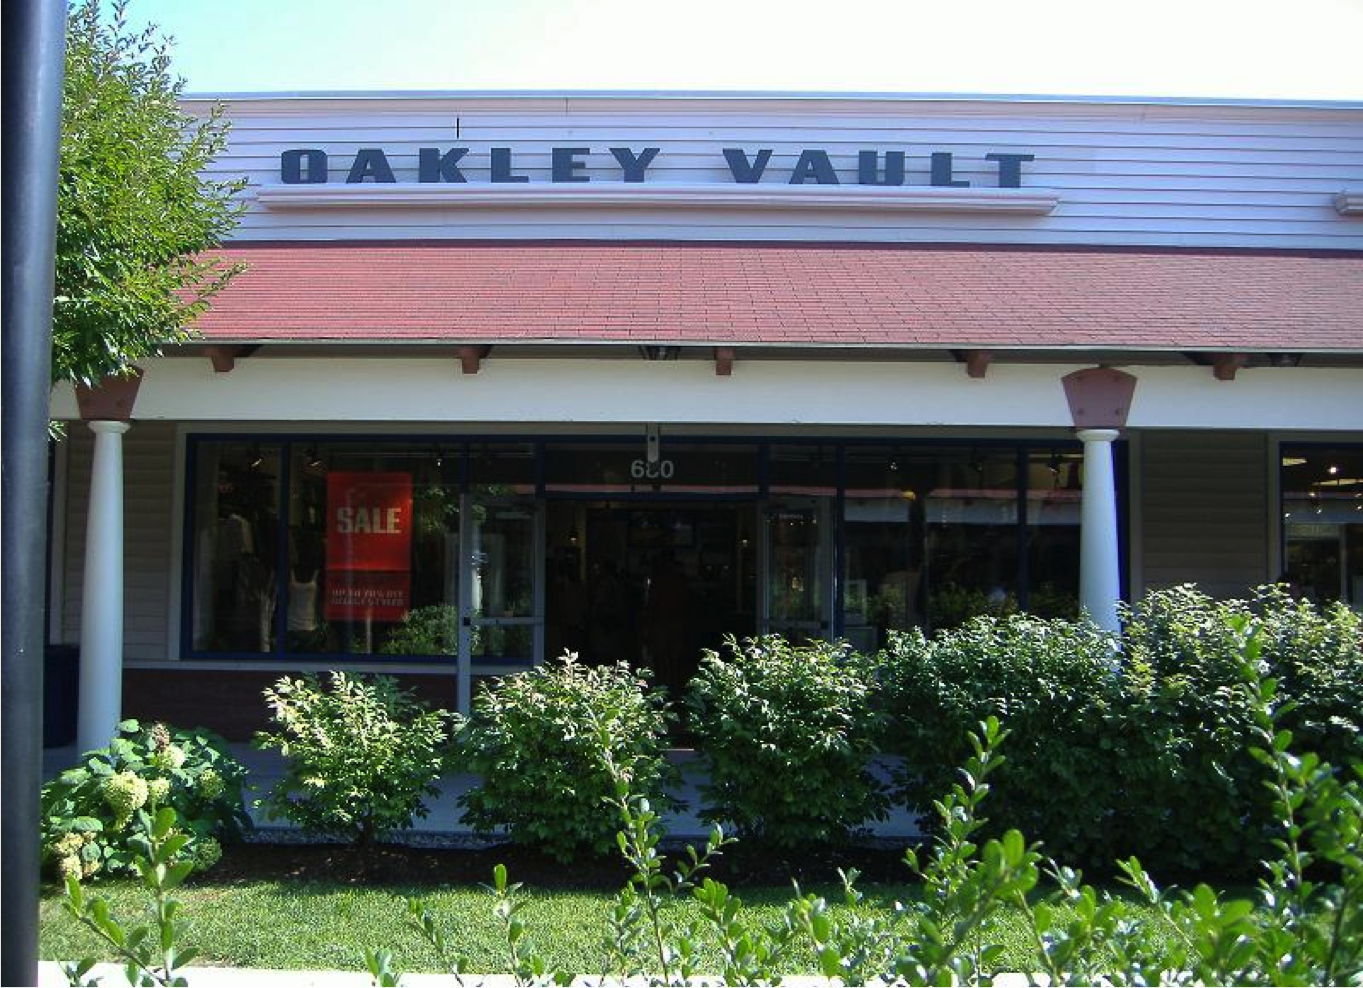 Oakley Vault Photo